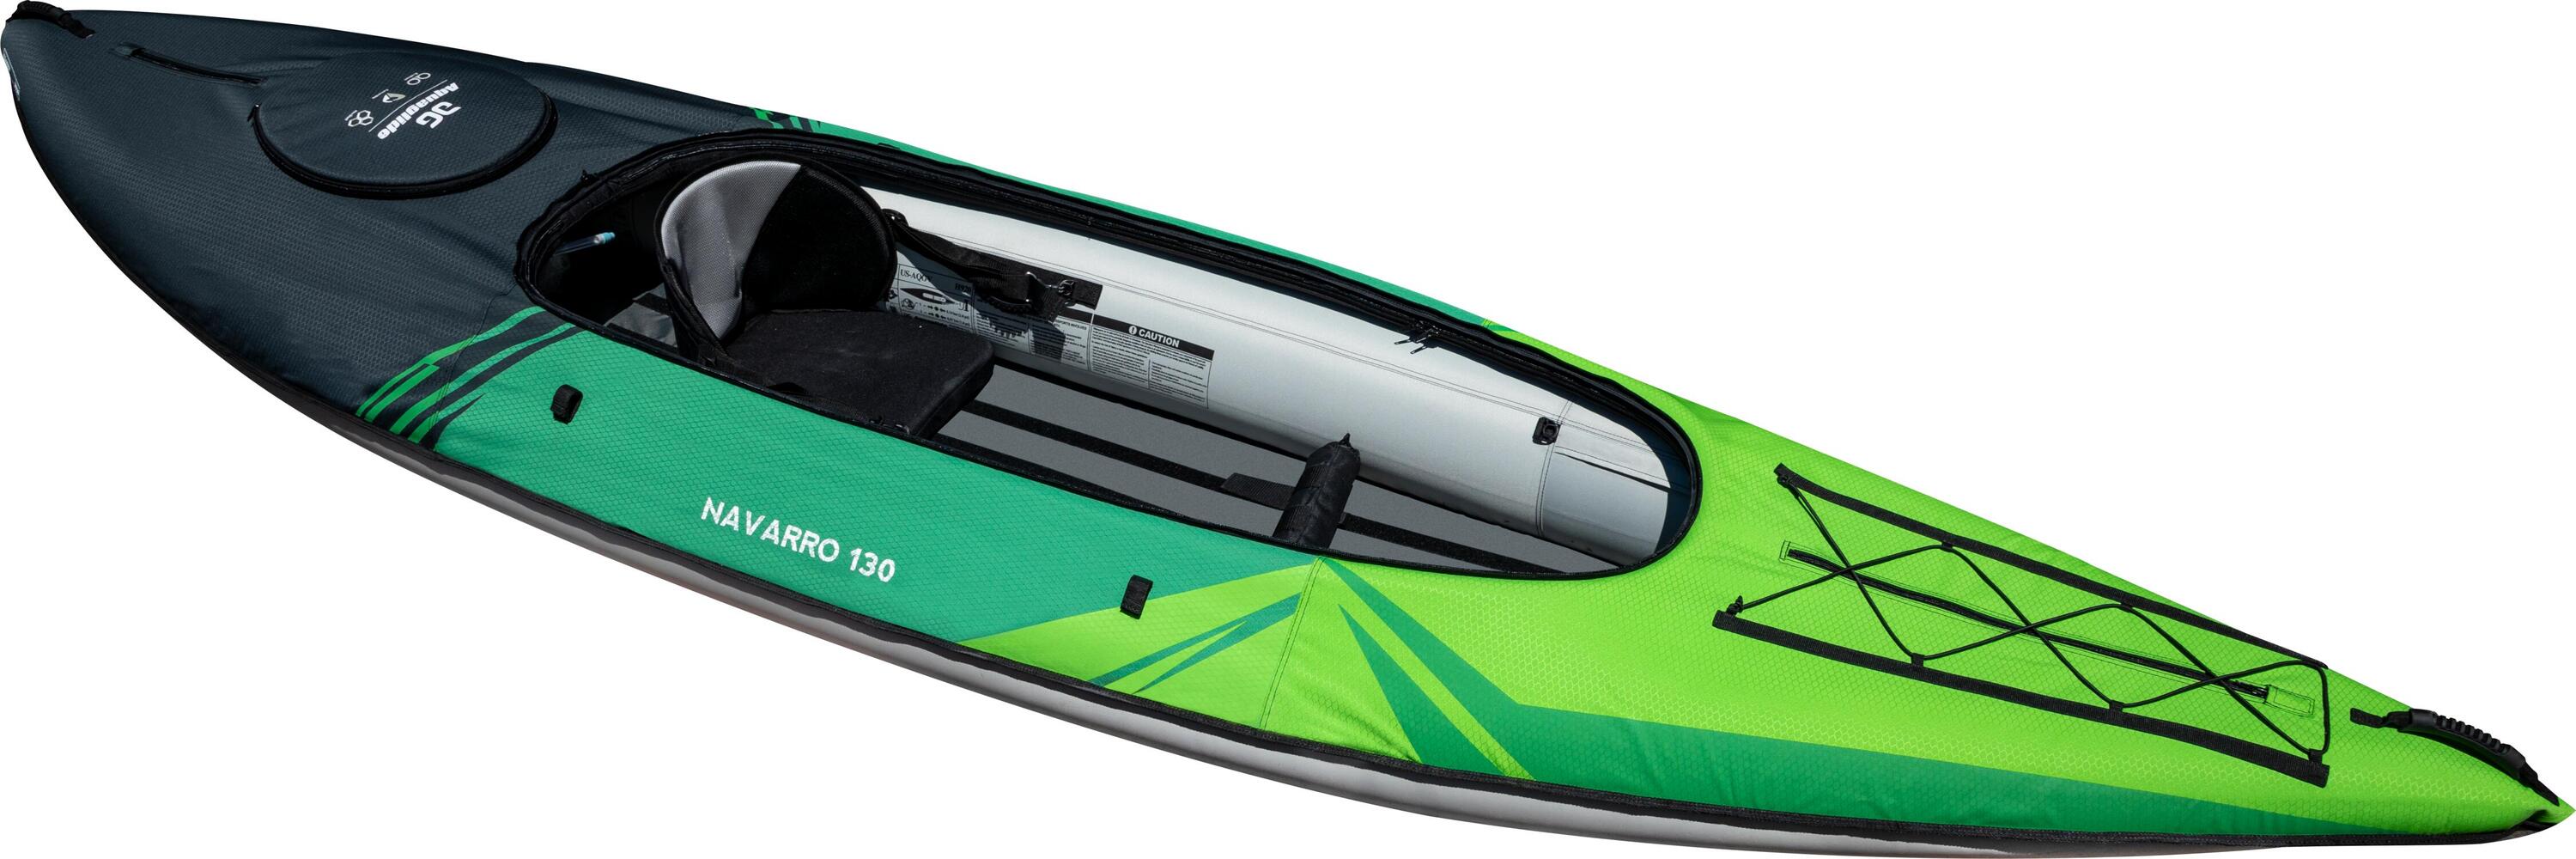 Navarro 130 - Inflatable Touring Kayak 5/5